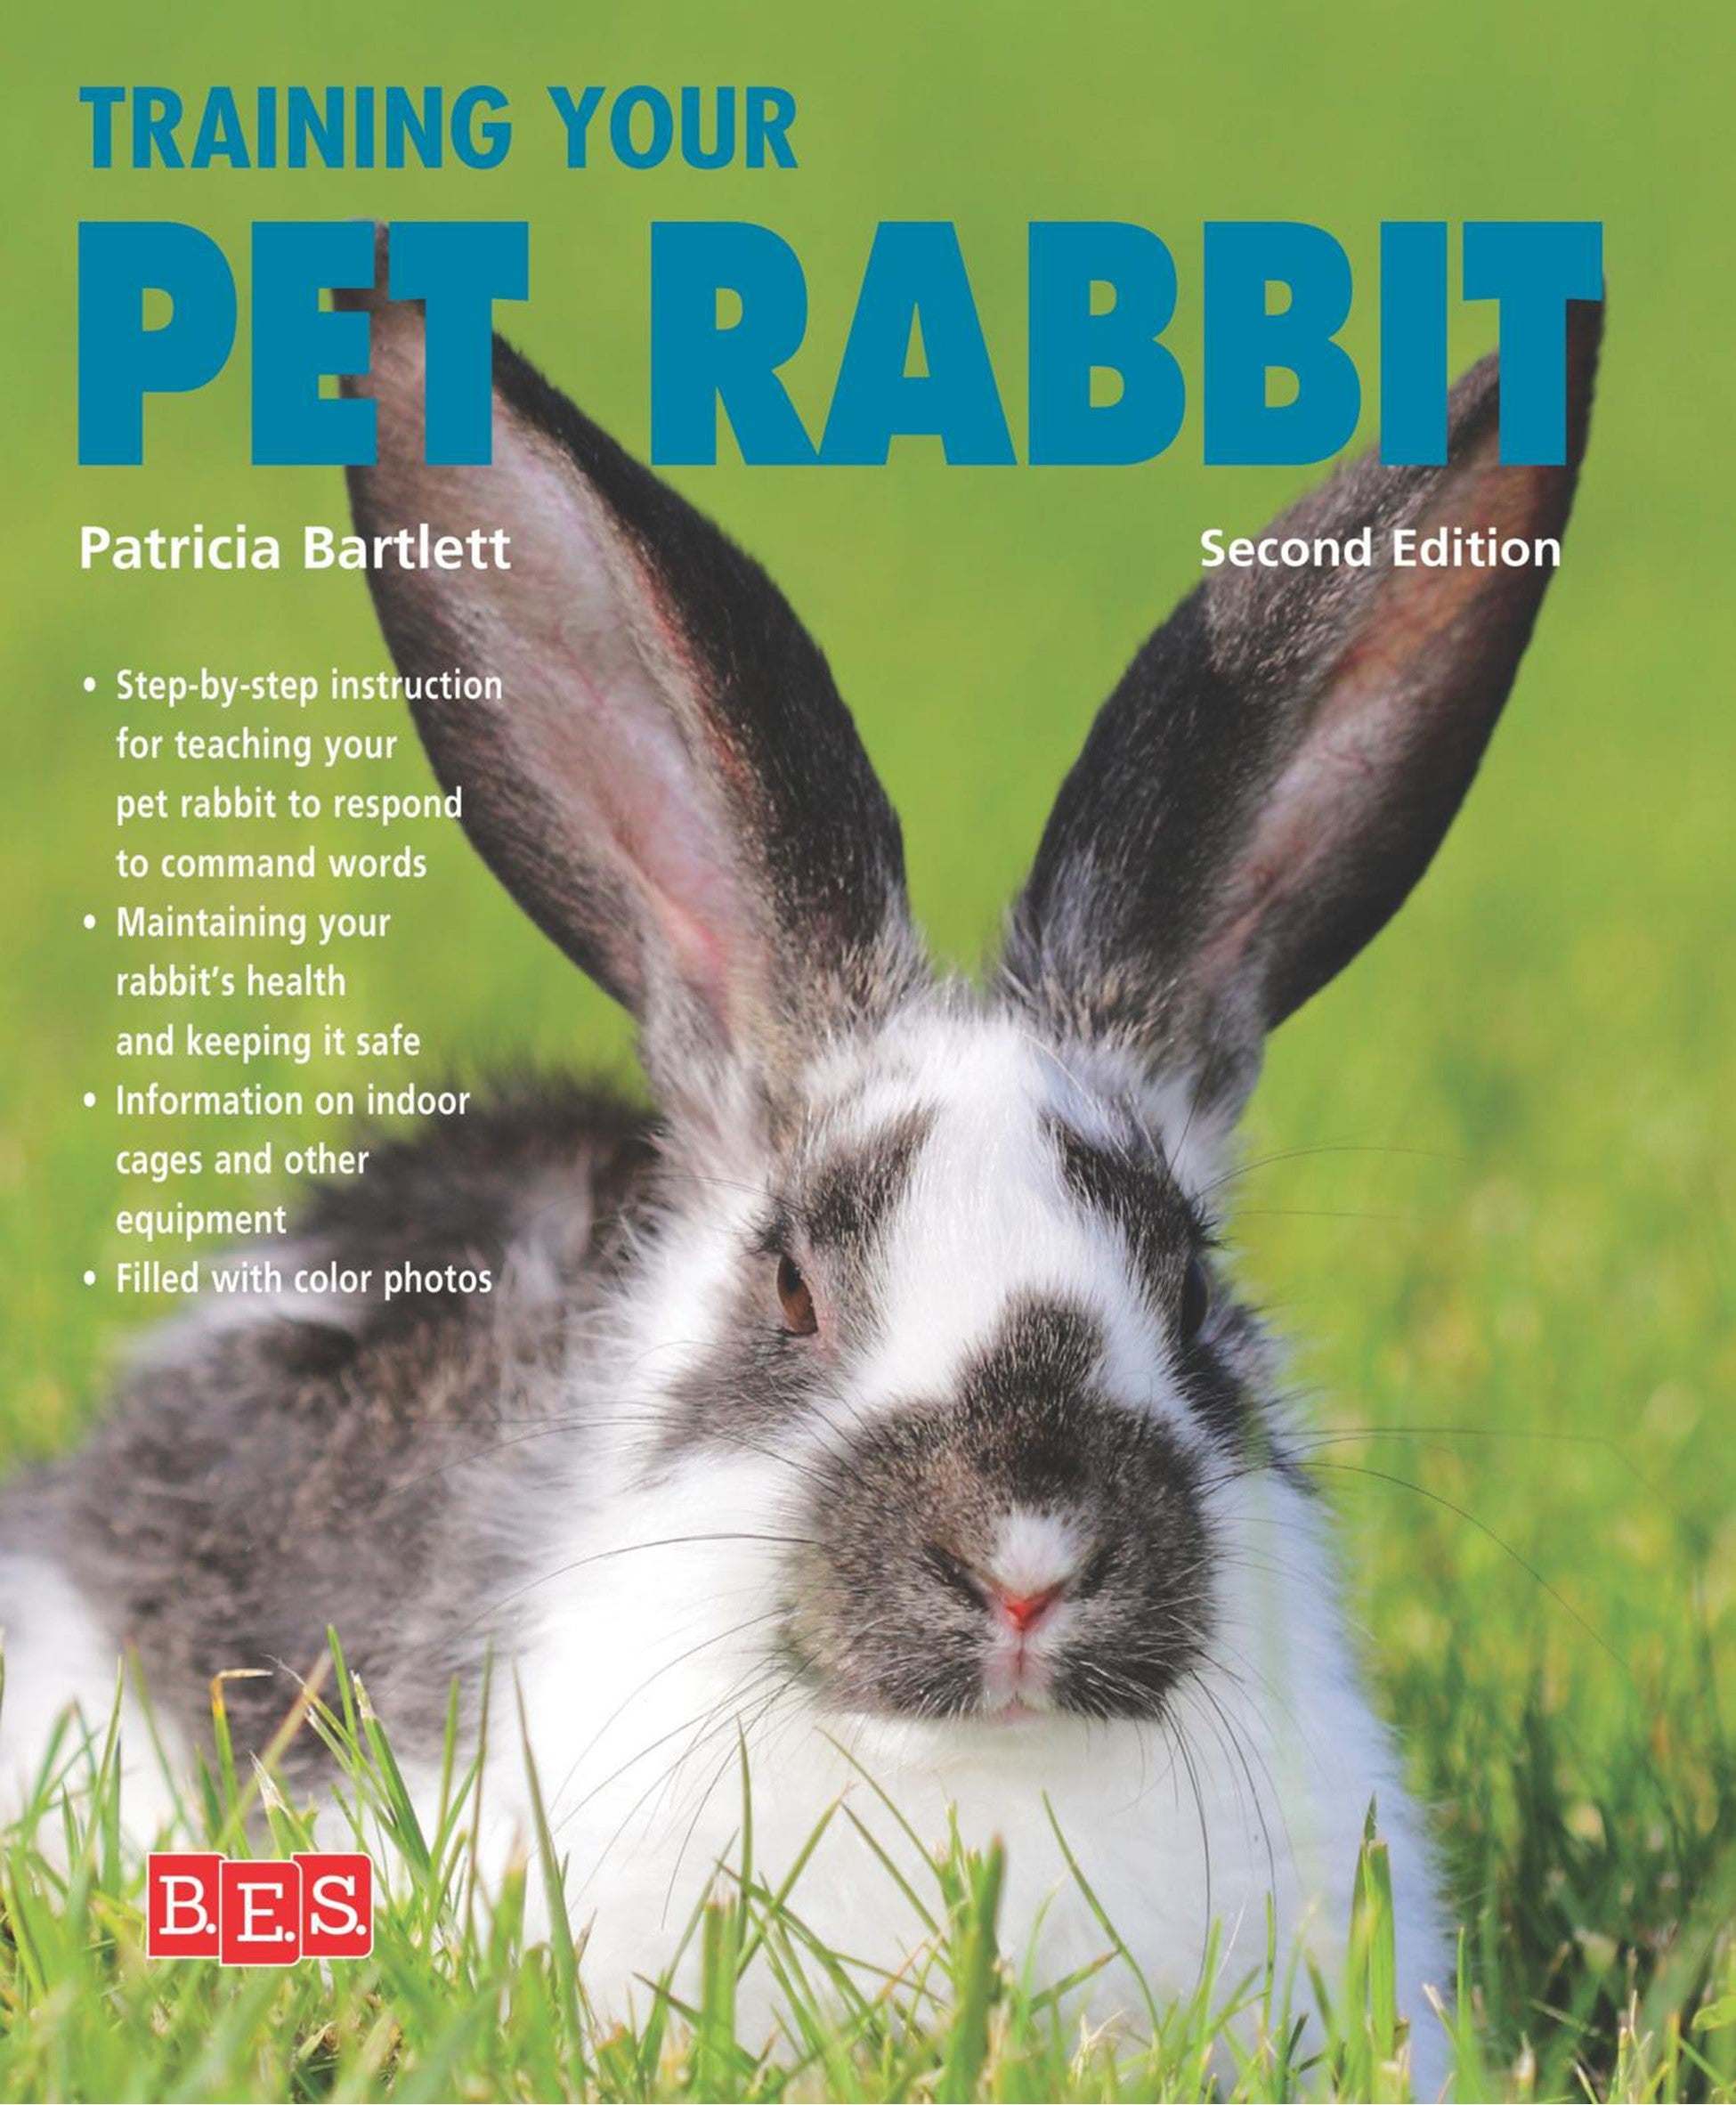 Training your Pet Rabbit—Second Edition